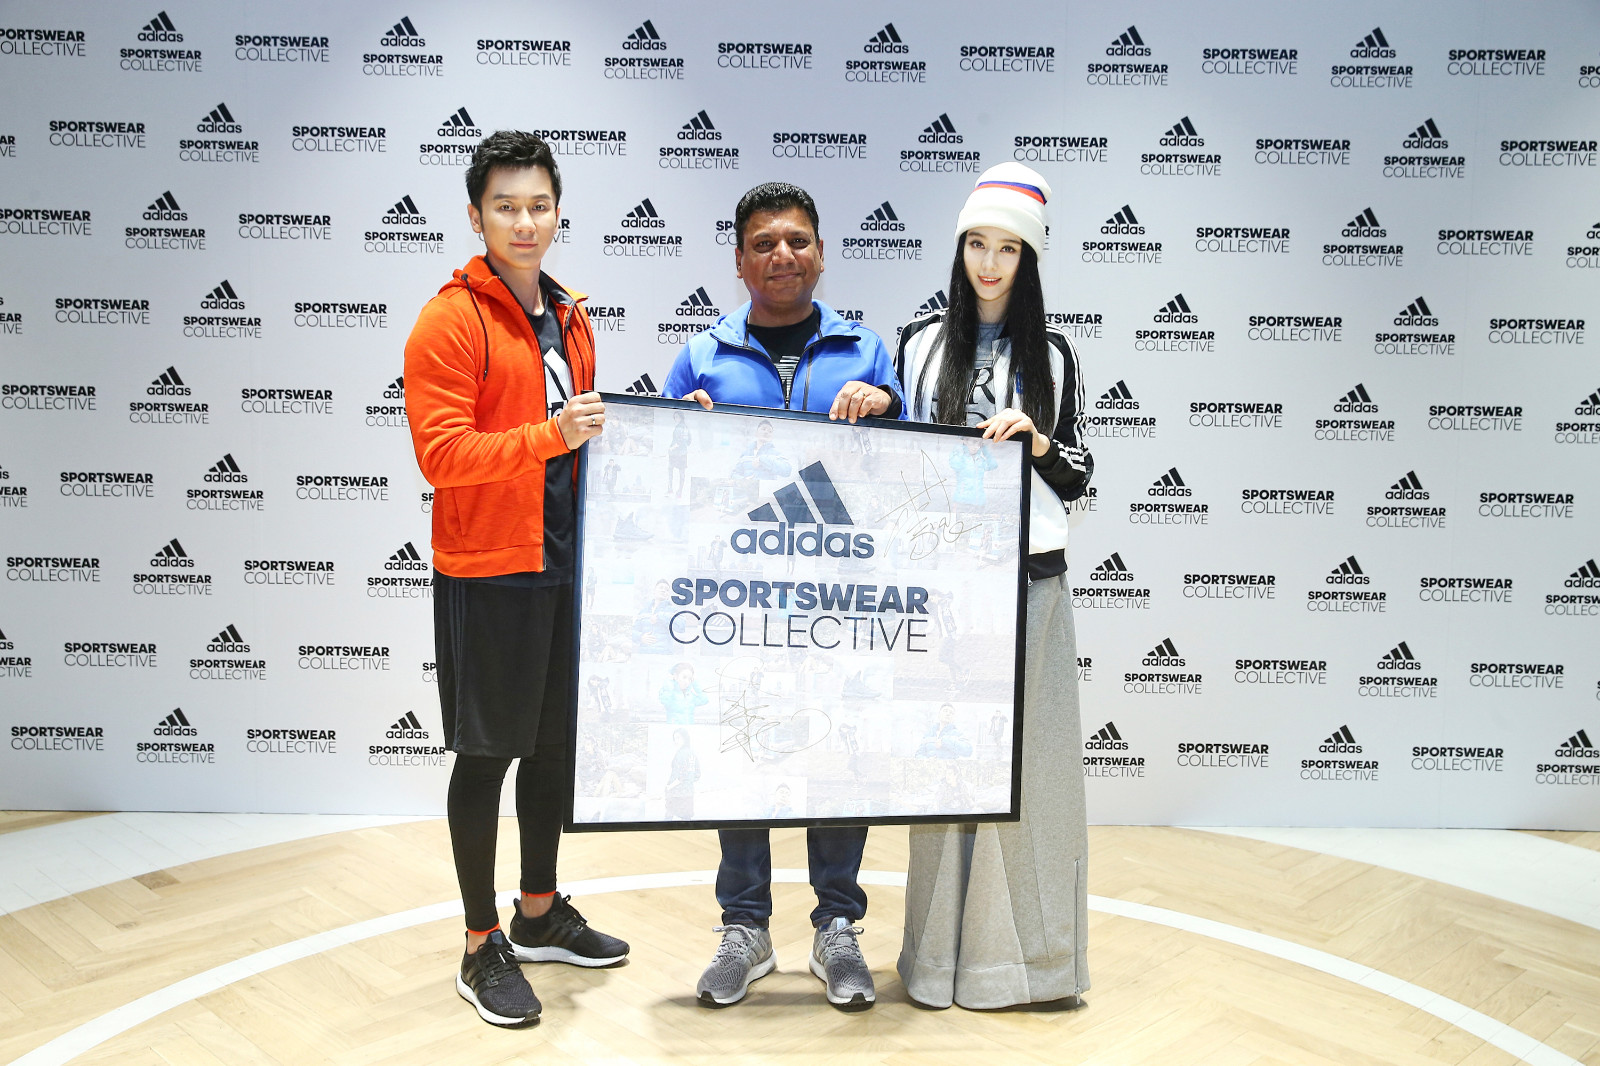 adidas sportswear collective